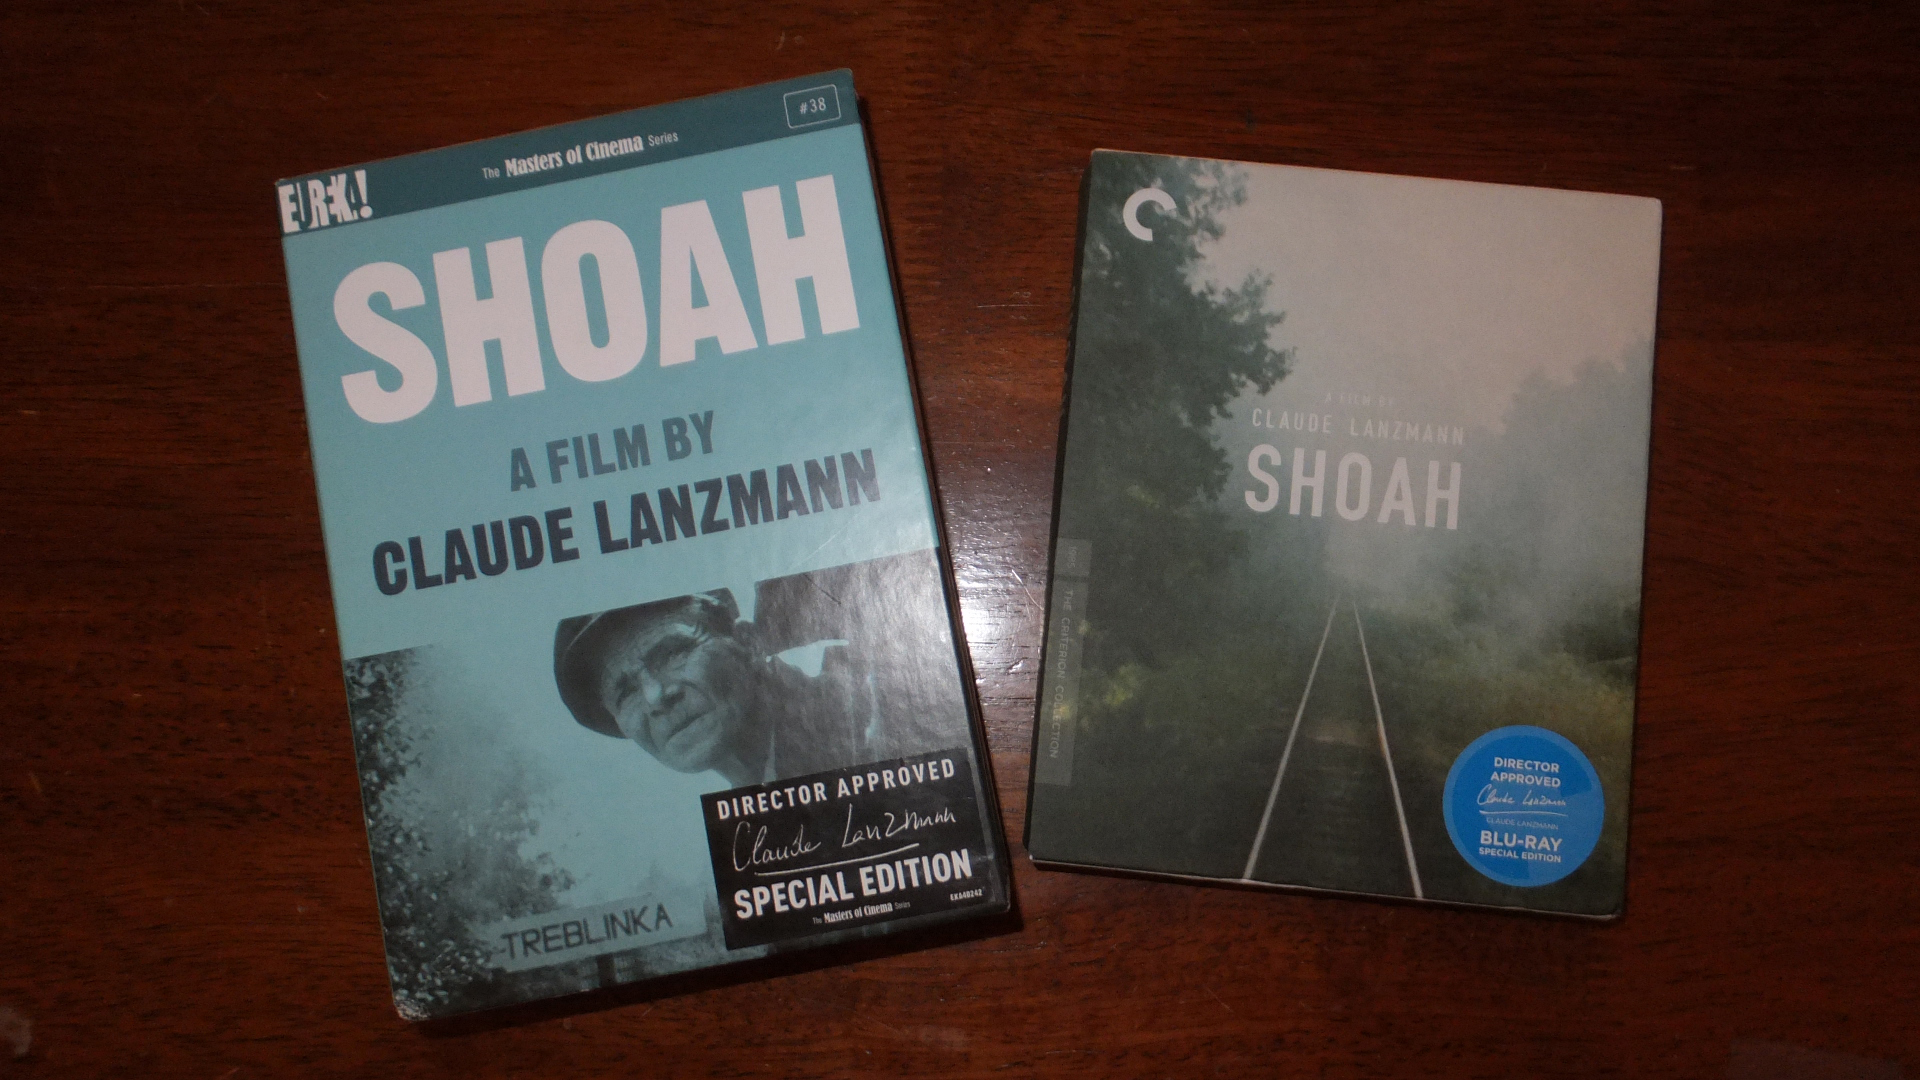 Cineaste365 (January 20, 2014 - DAY 101) - "SHOAH" - Claude Lanzmann